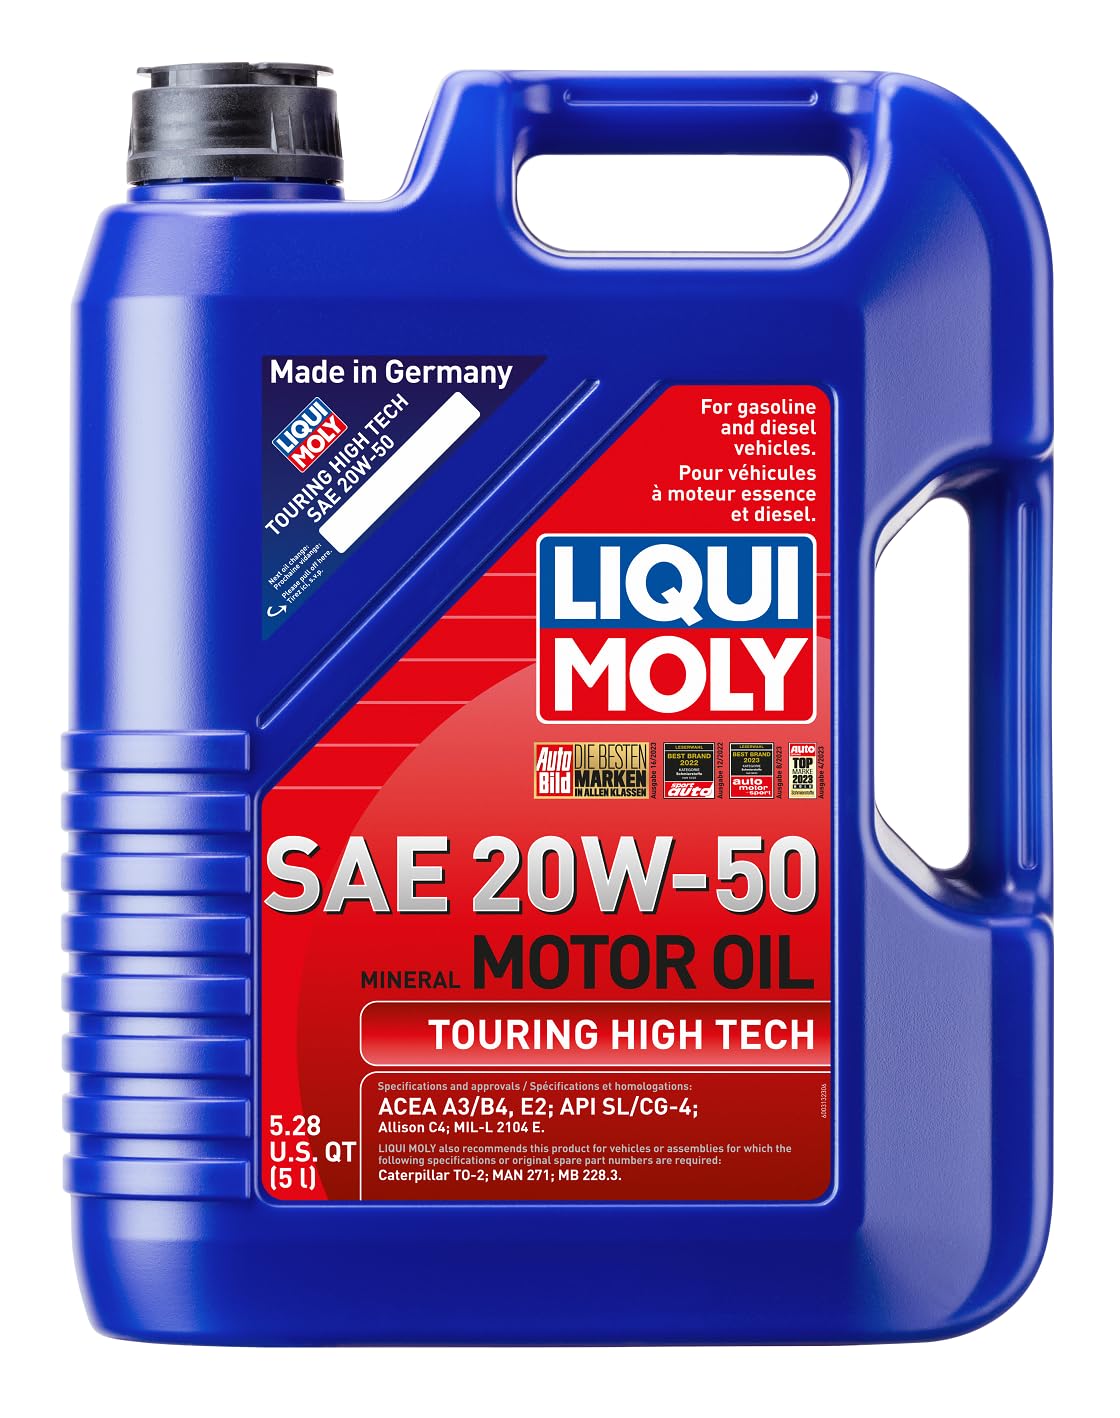 LIQUI MOLY Touring High Tech 20W-50 | 5 L | mineralisches Motoröl | Art.-Nr.: 1255 von Liqui Moly